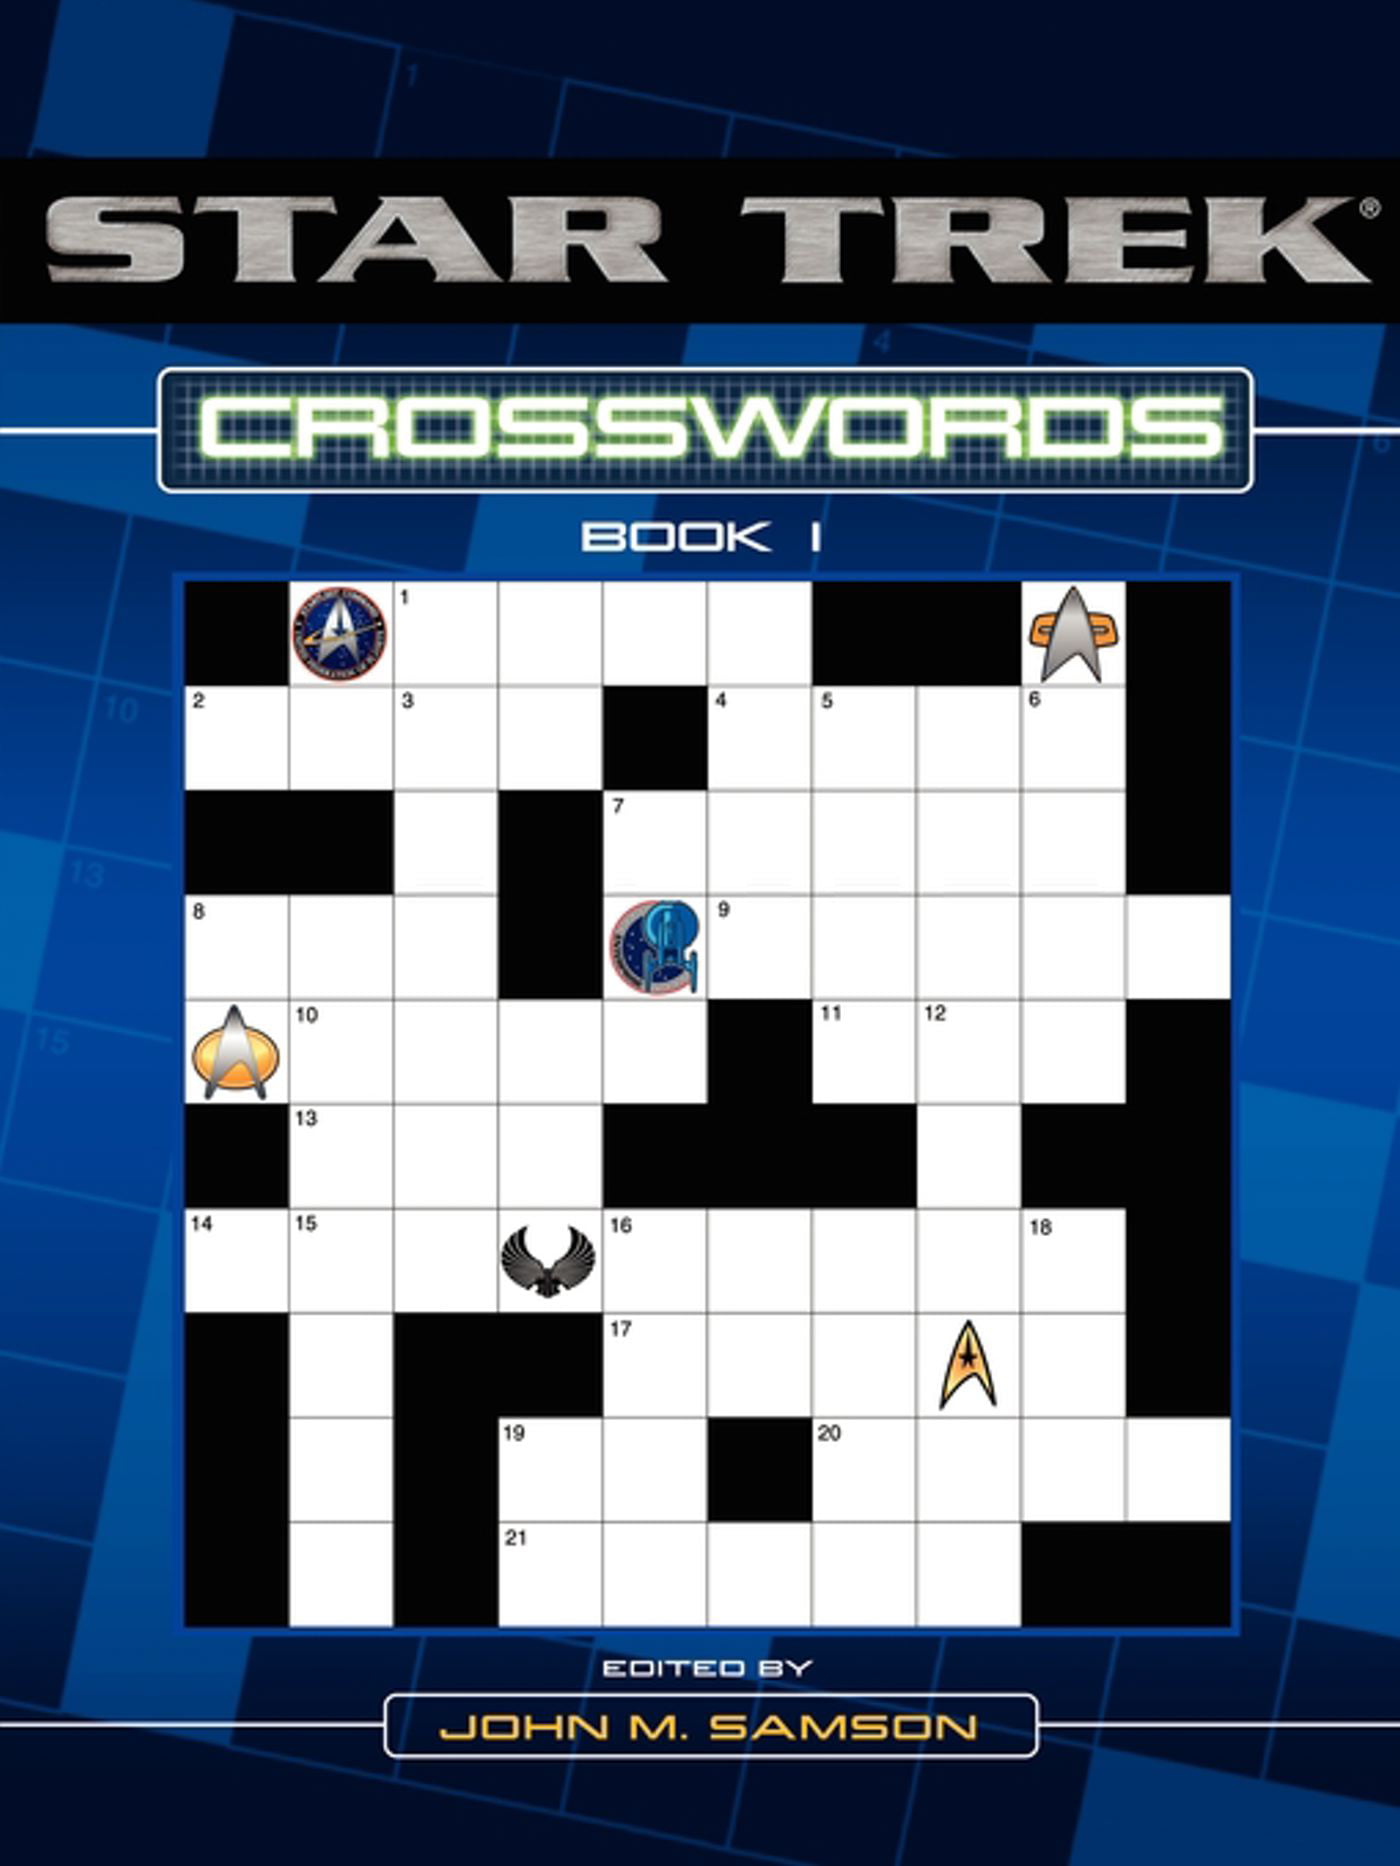 star trek character played by michael dorn crossword clue